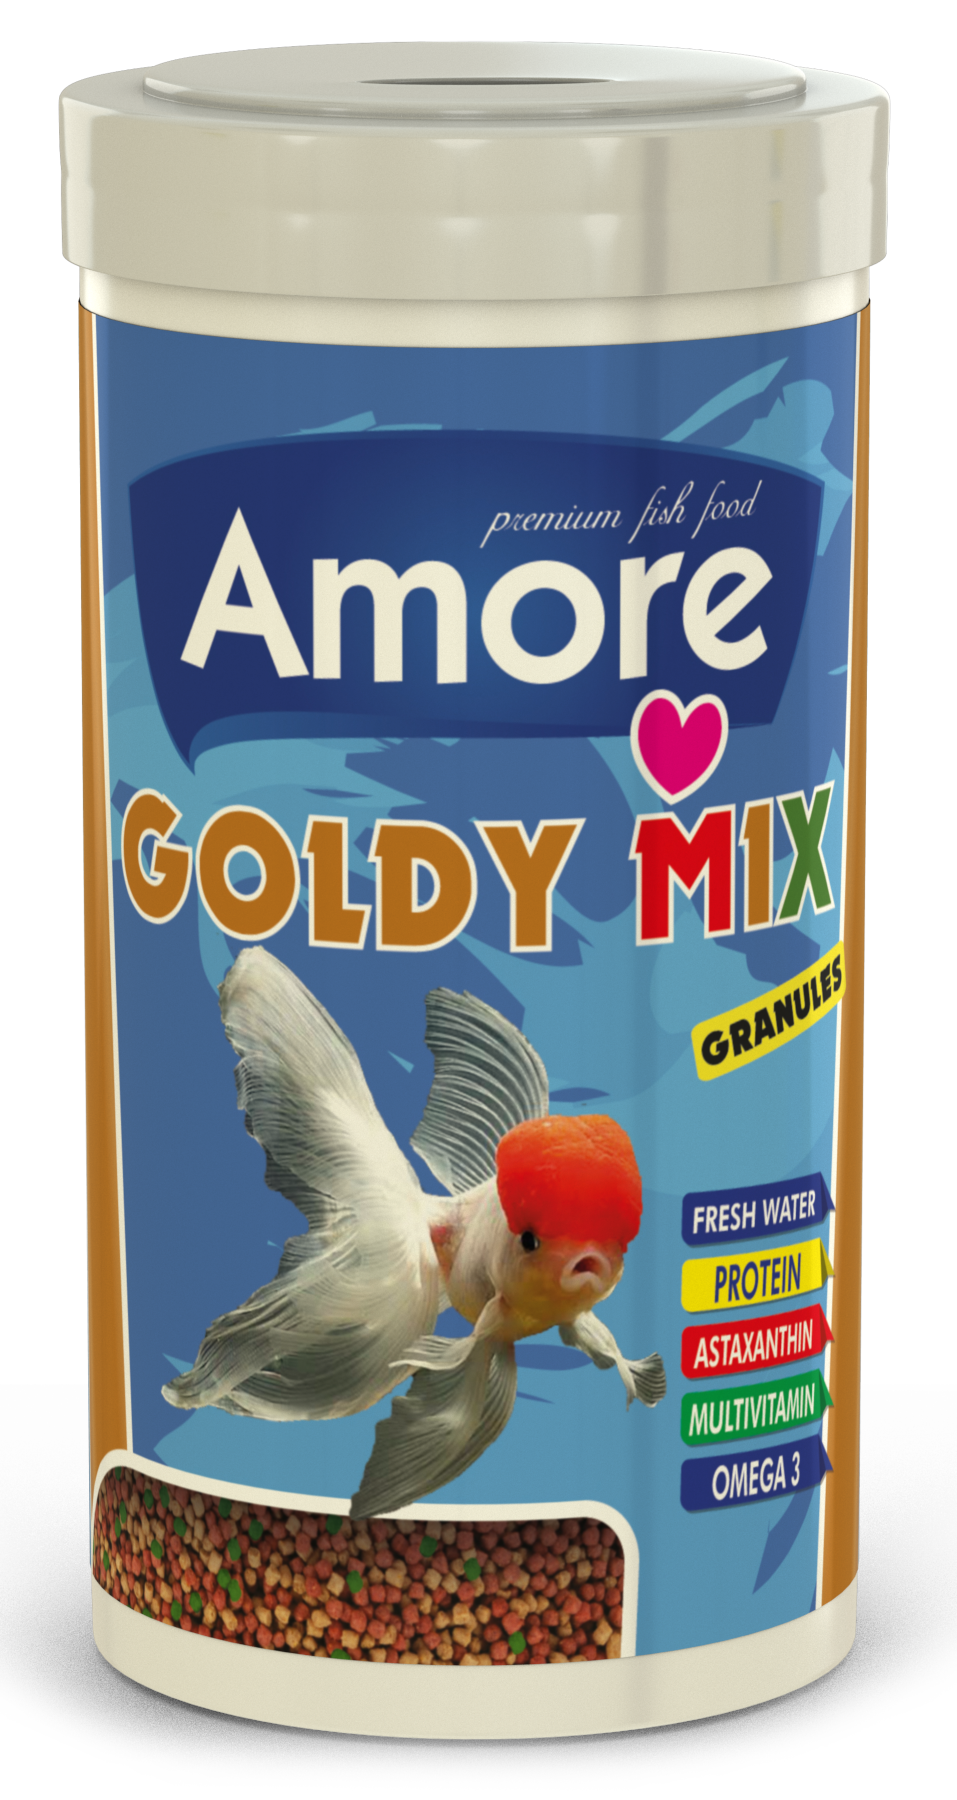 Amore Goldy Mix Granules ve Natural 1000ml Japon Balığı Yemi, Vitamin